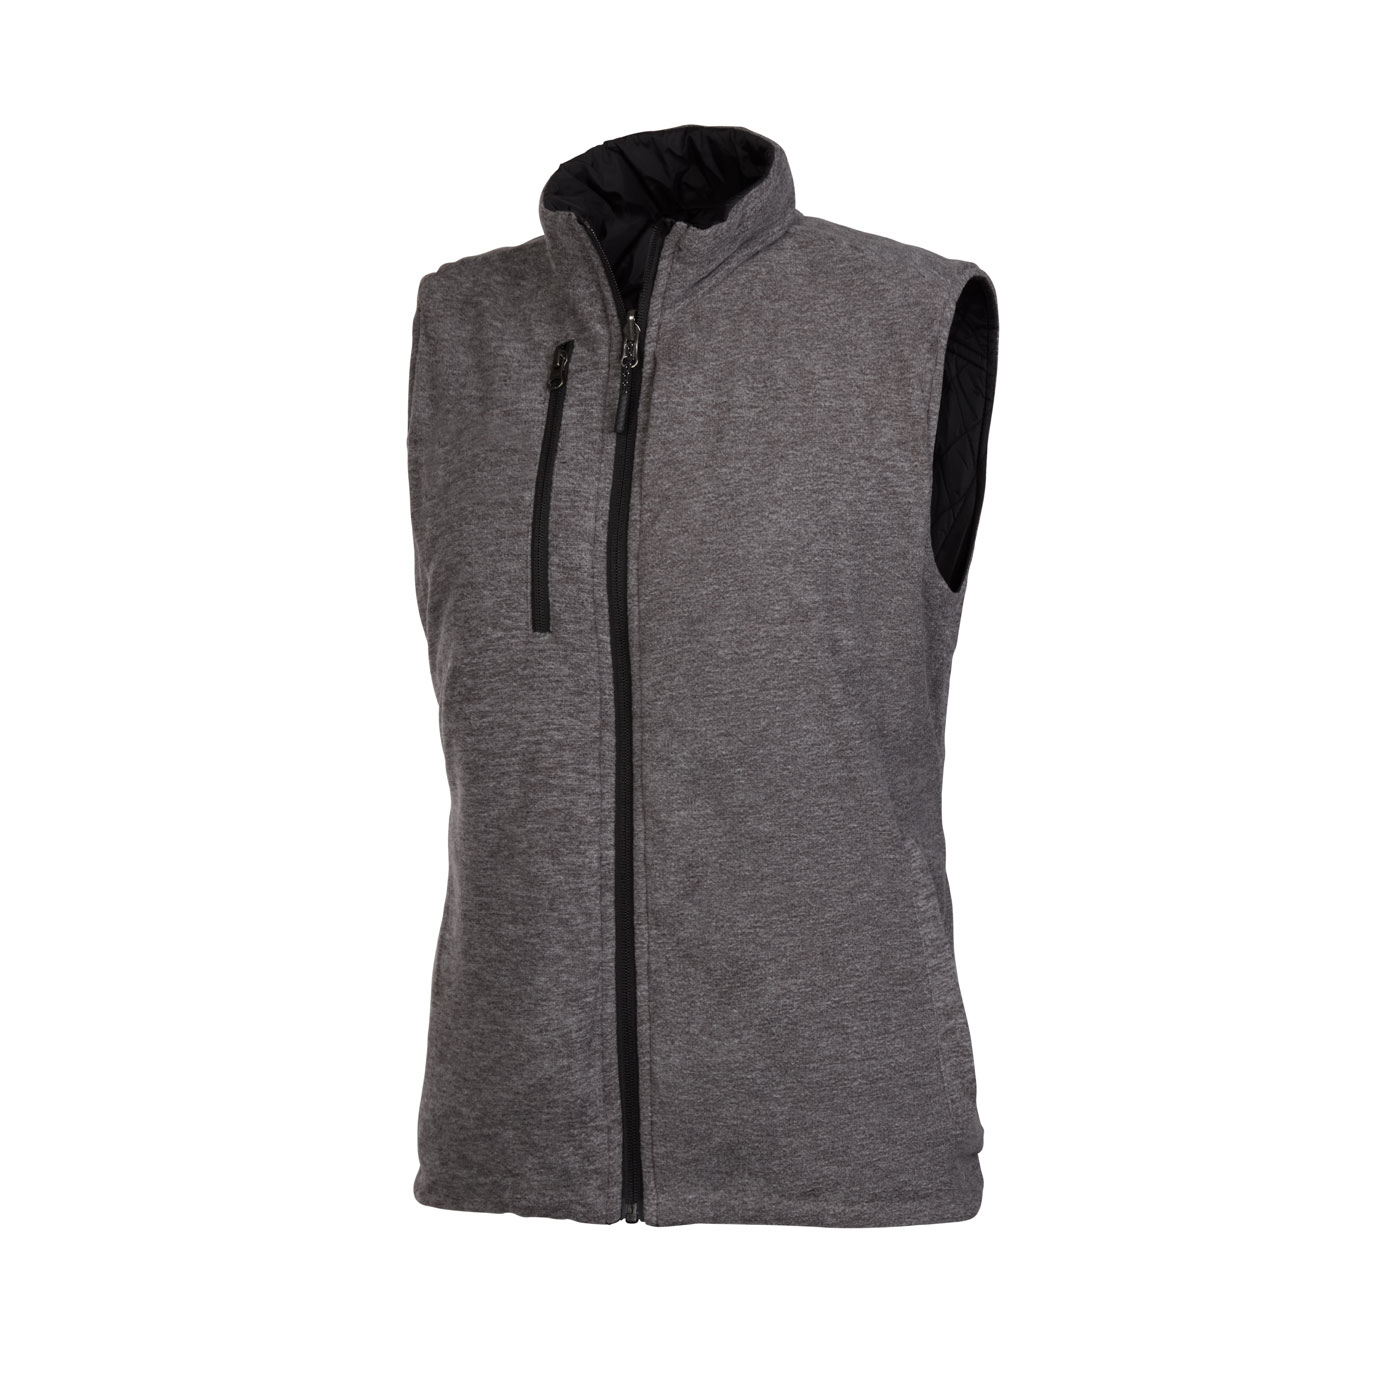 FedEx Ladies’ Adapt Reversible Zippered Vest | The FedEx Company Store